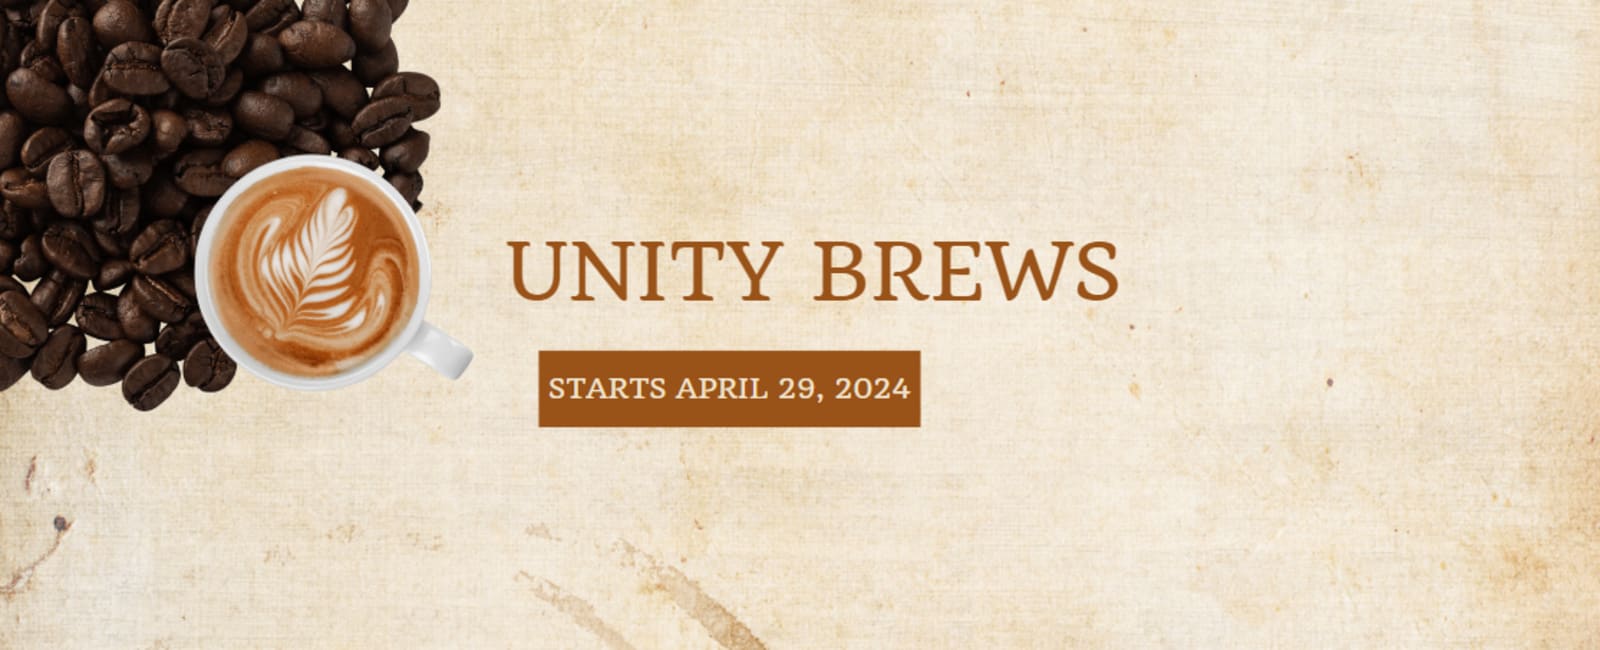 Unity Brews